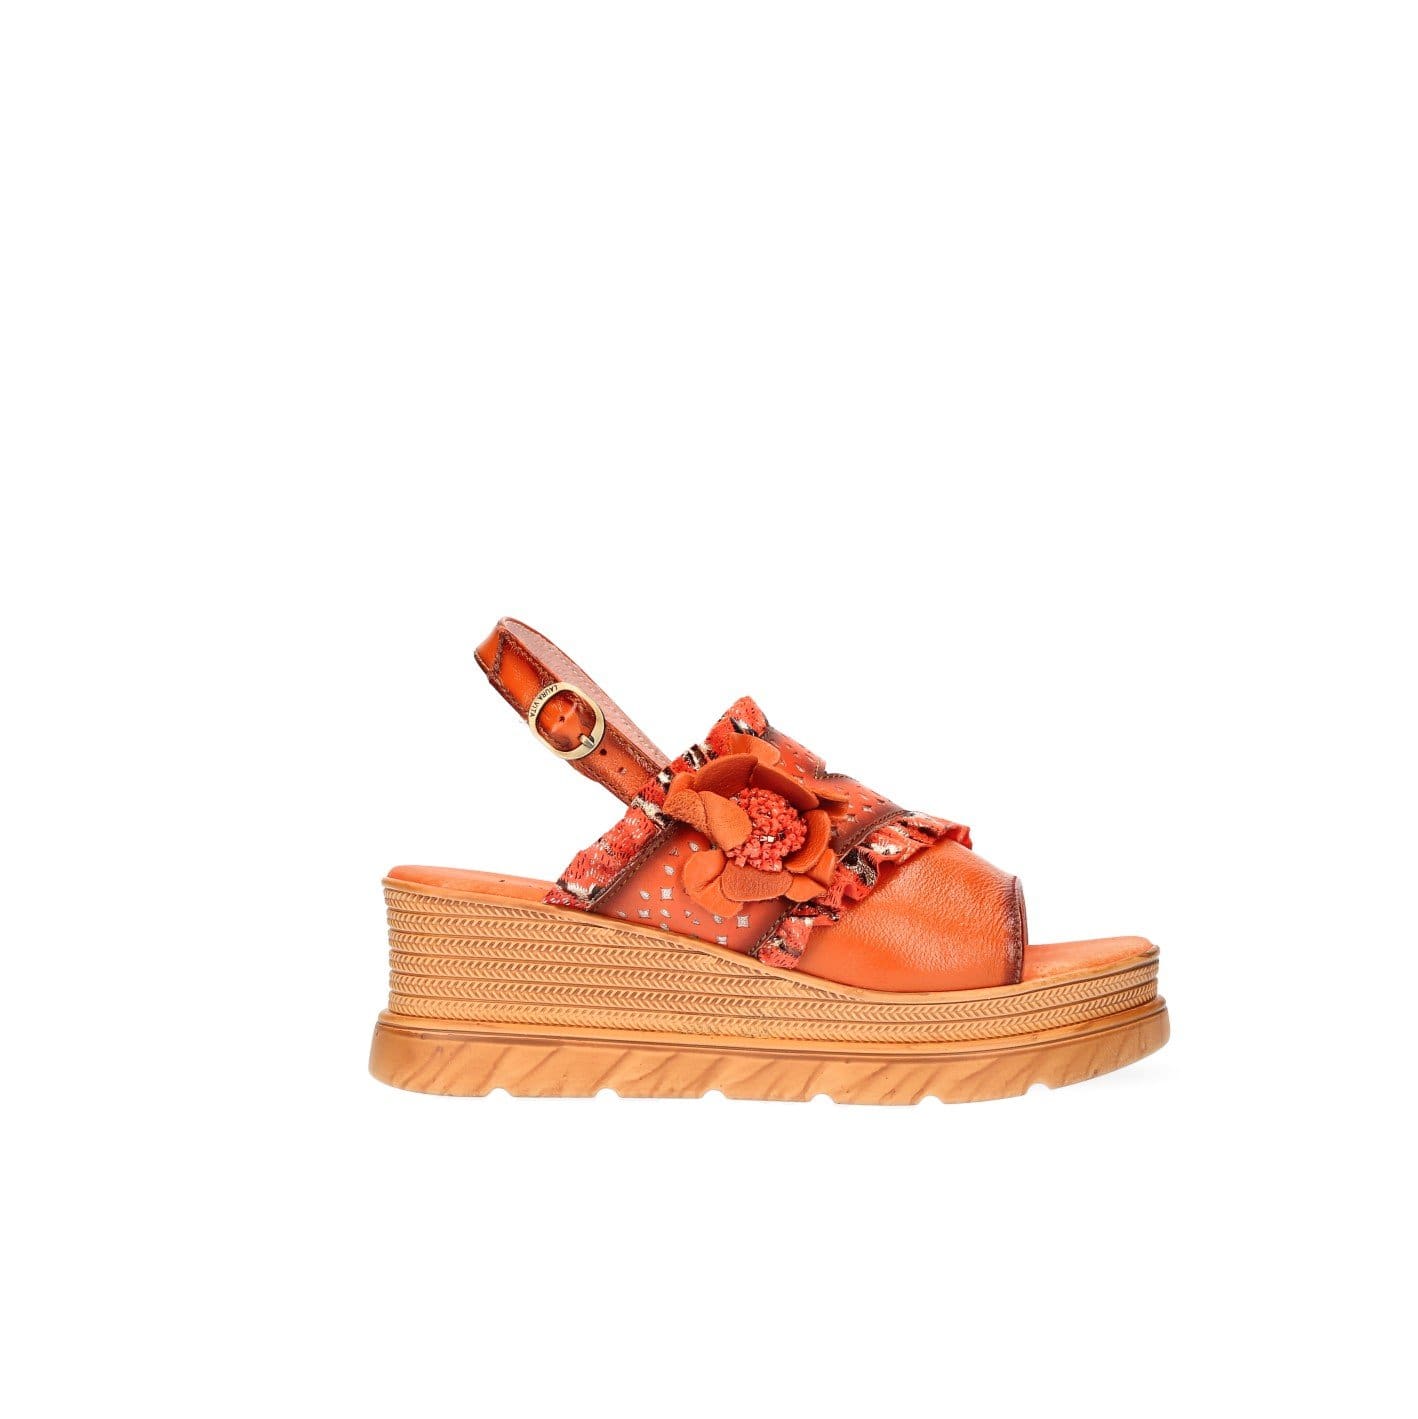 Chaussures JACASSEO 03 - 35 / Orange - Sandale